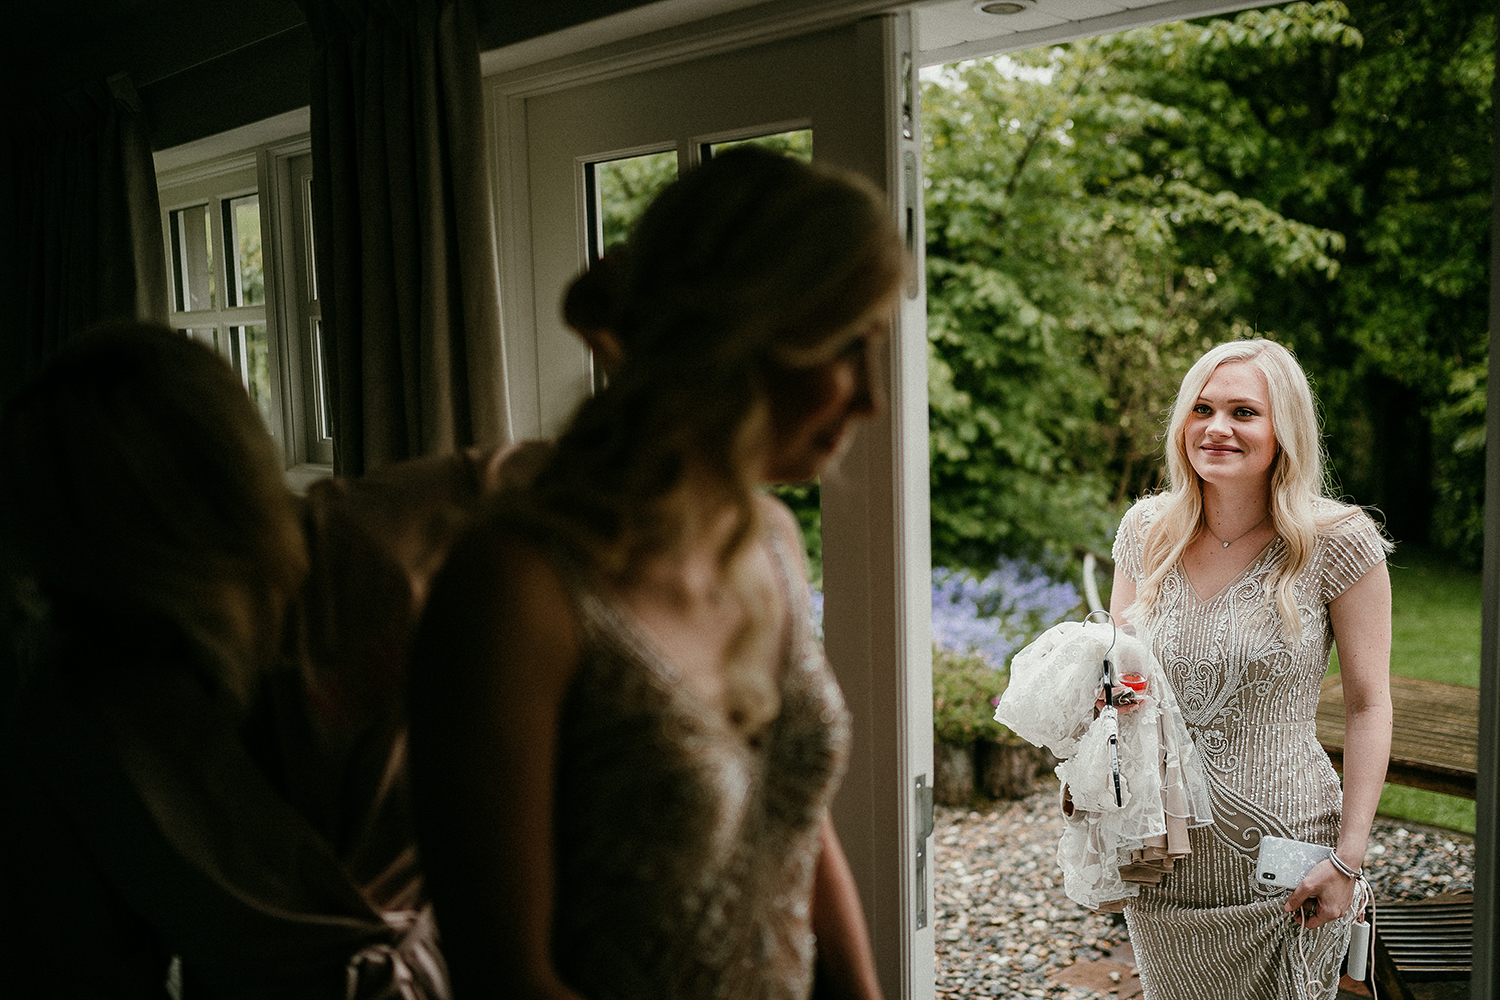 Northern Ireland Elopement Photographer Rob Dight Something Blue Weddings Blog